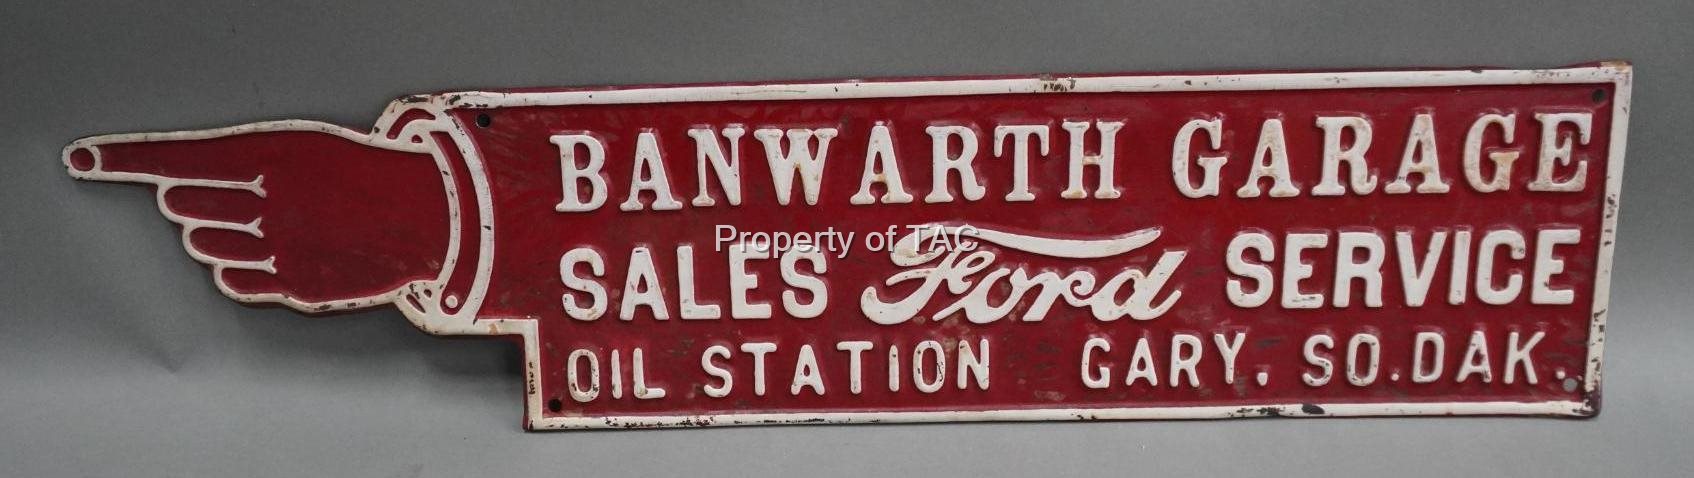 Banwarth Garage Ford Sales Service Oil Station Gary, So. Dak. Metal Pointer Sign